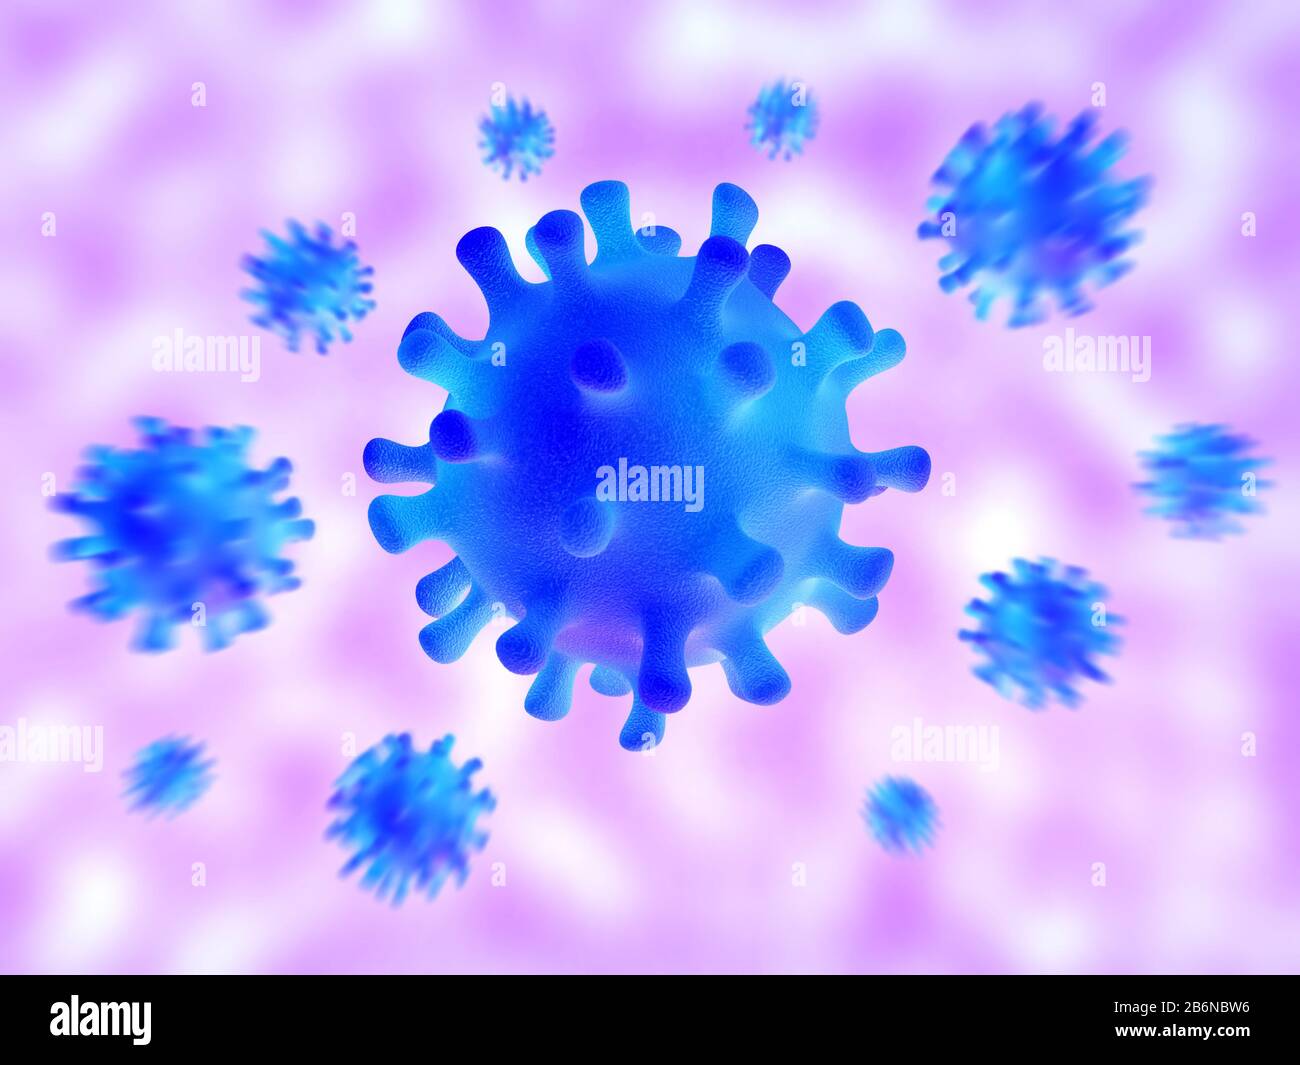 Virus, Coronavirus, Flu, HIV, Influenza. 3d Rendering Concept Illustration. Epidemic, Flu, Global Pandemic, outbreak. Stock Photo